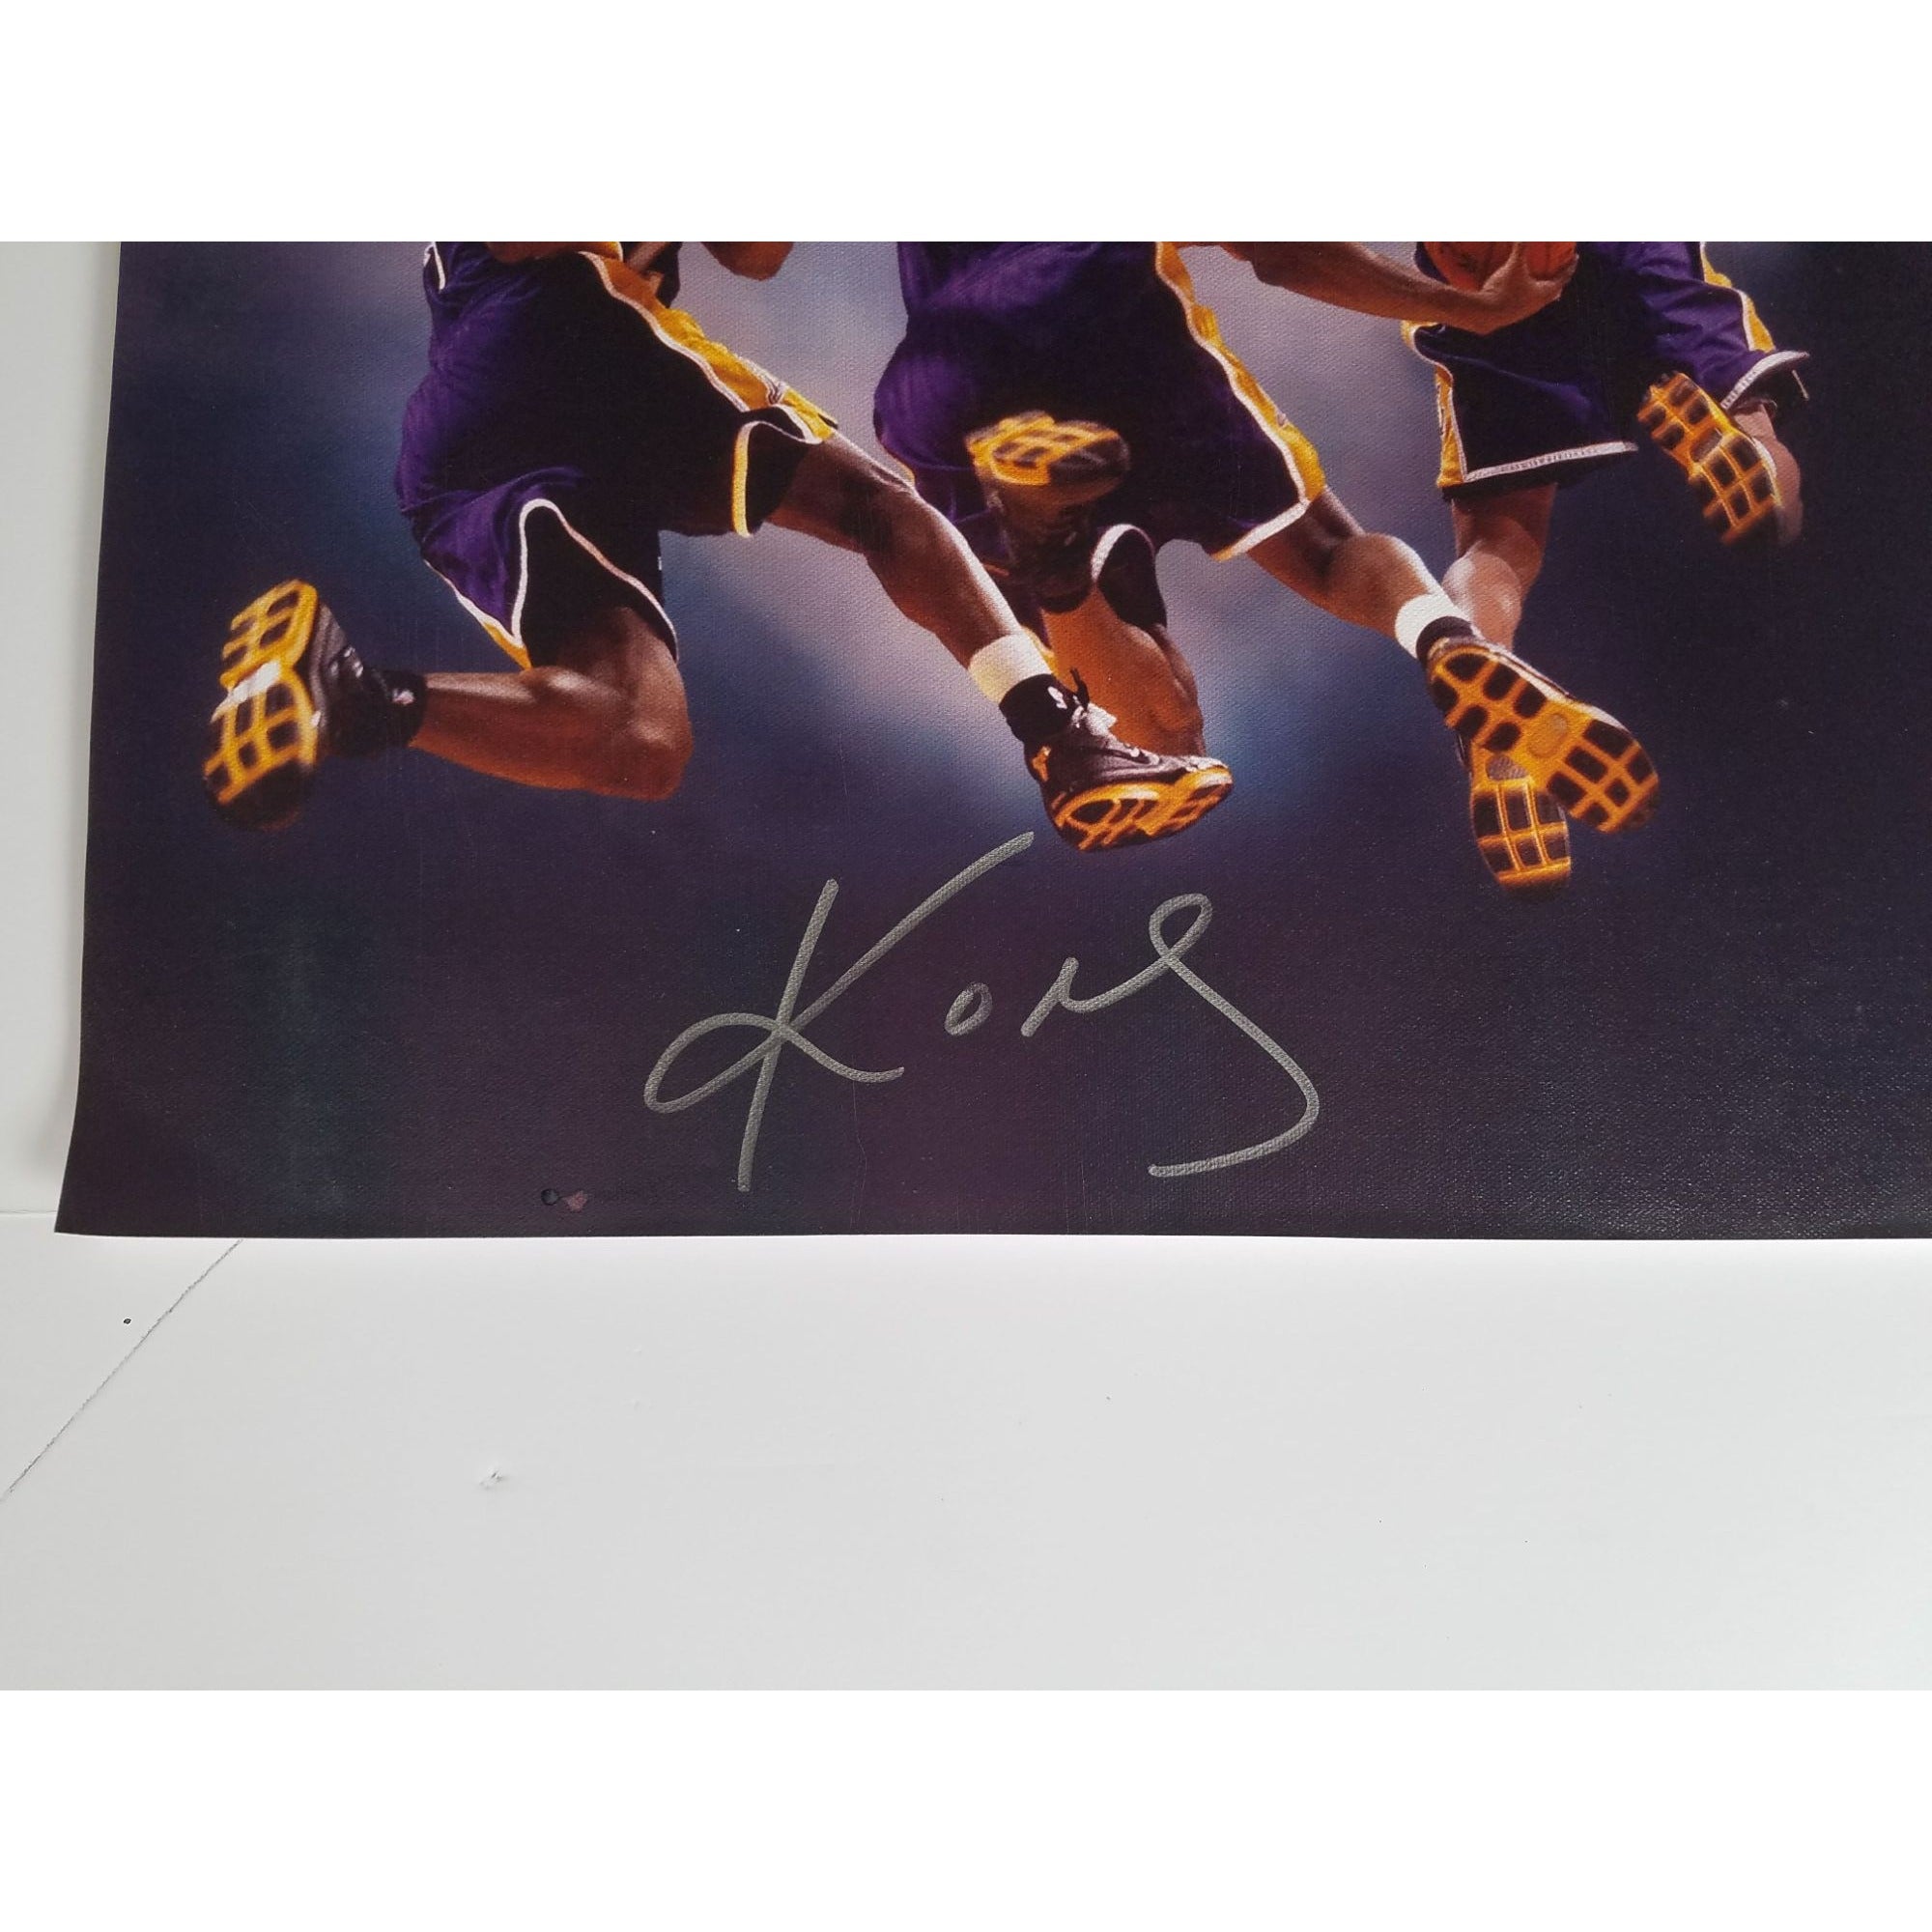 Kobe Bryant 16x20 mounted photo signed with proof